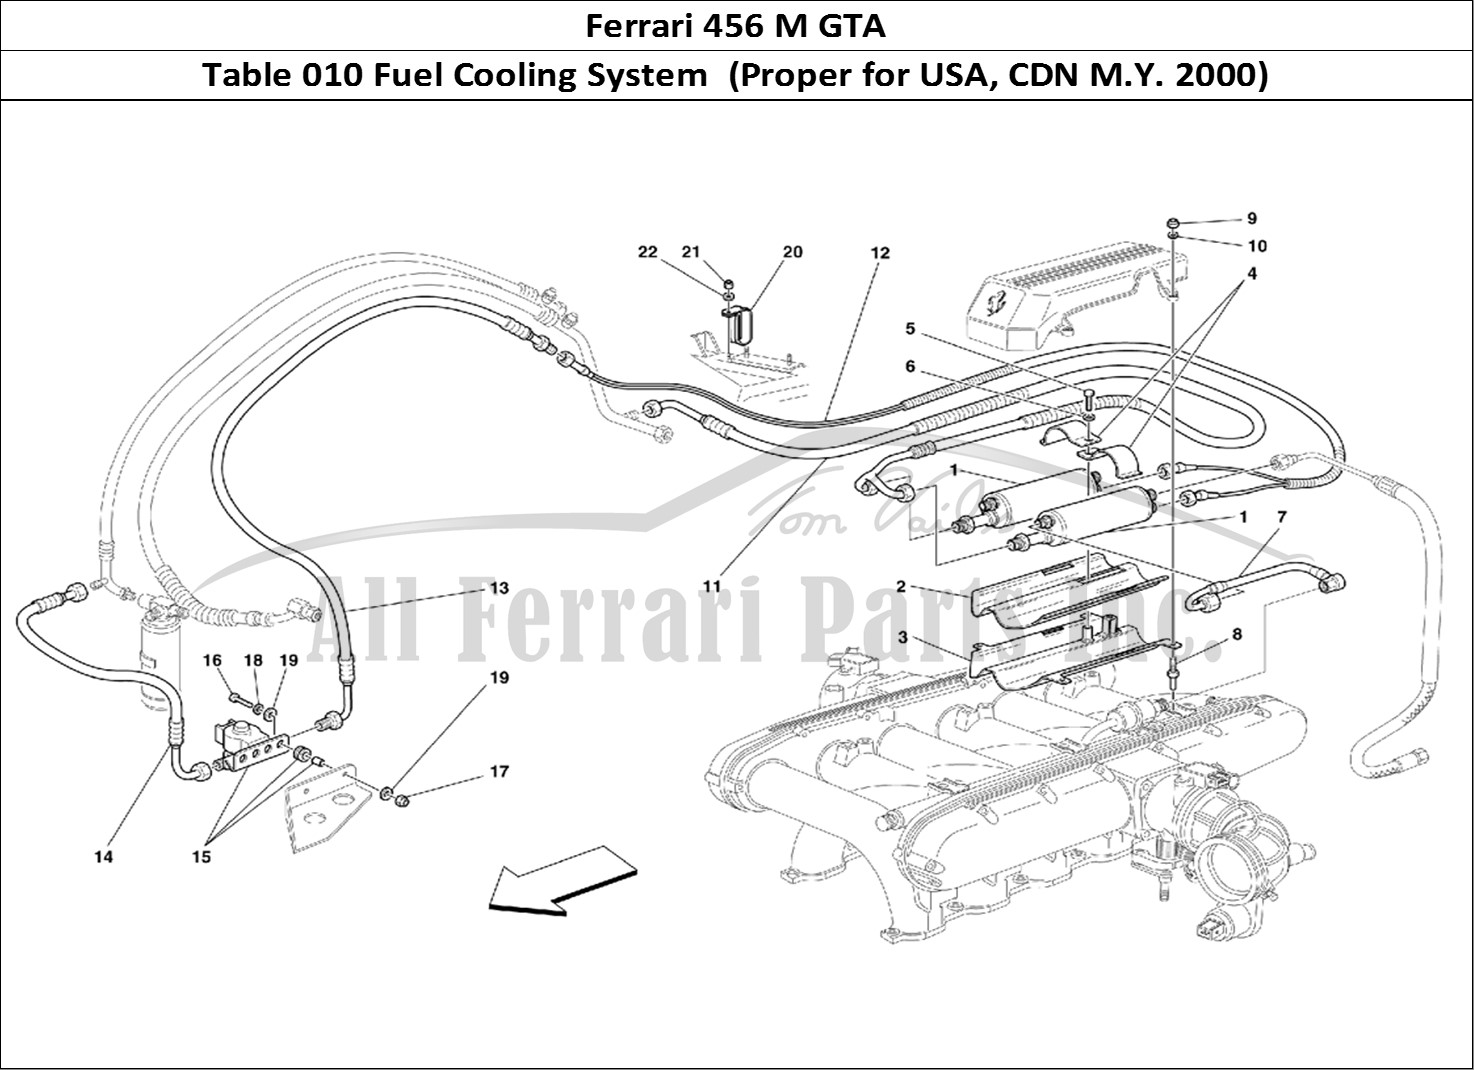 Ferrari Parts Ferrari 456 M GT Page 010 Fuel Cooling System -Vali